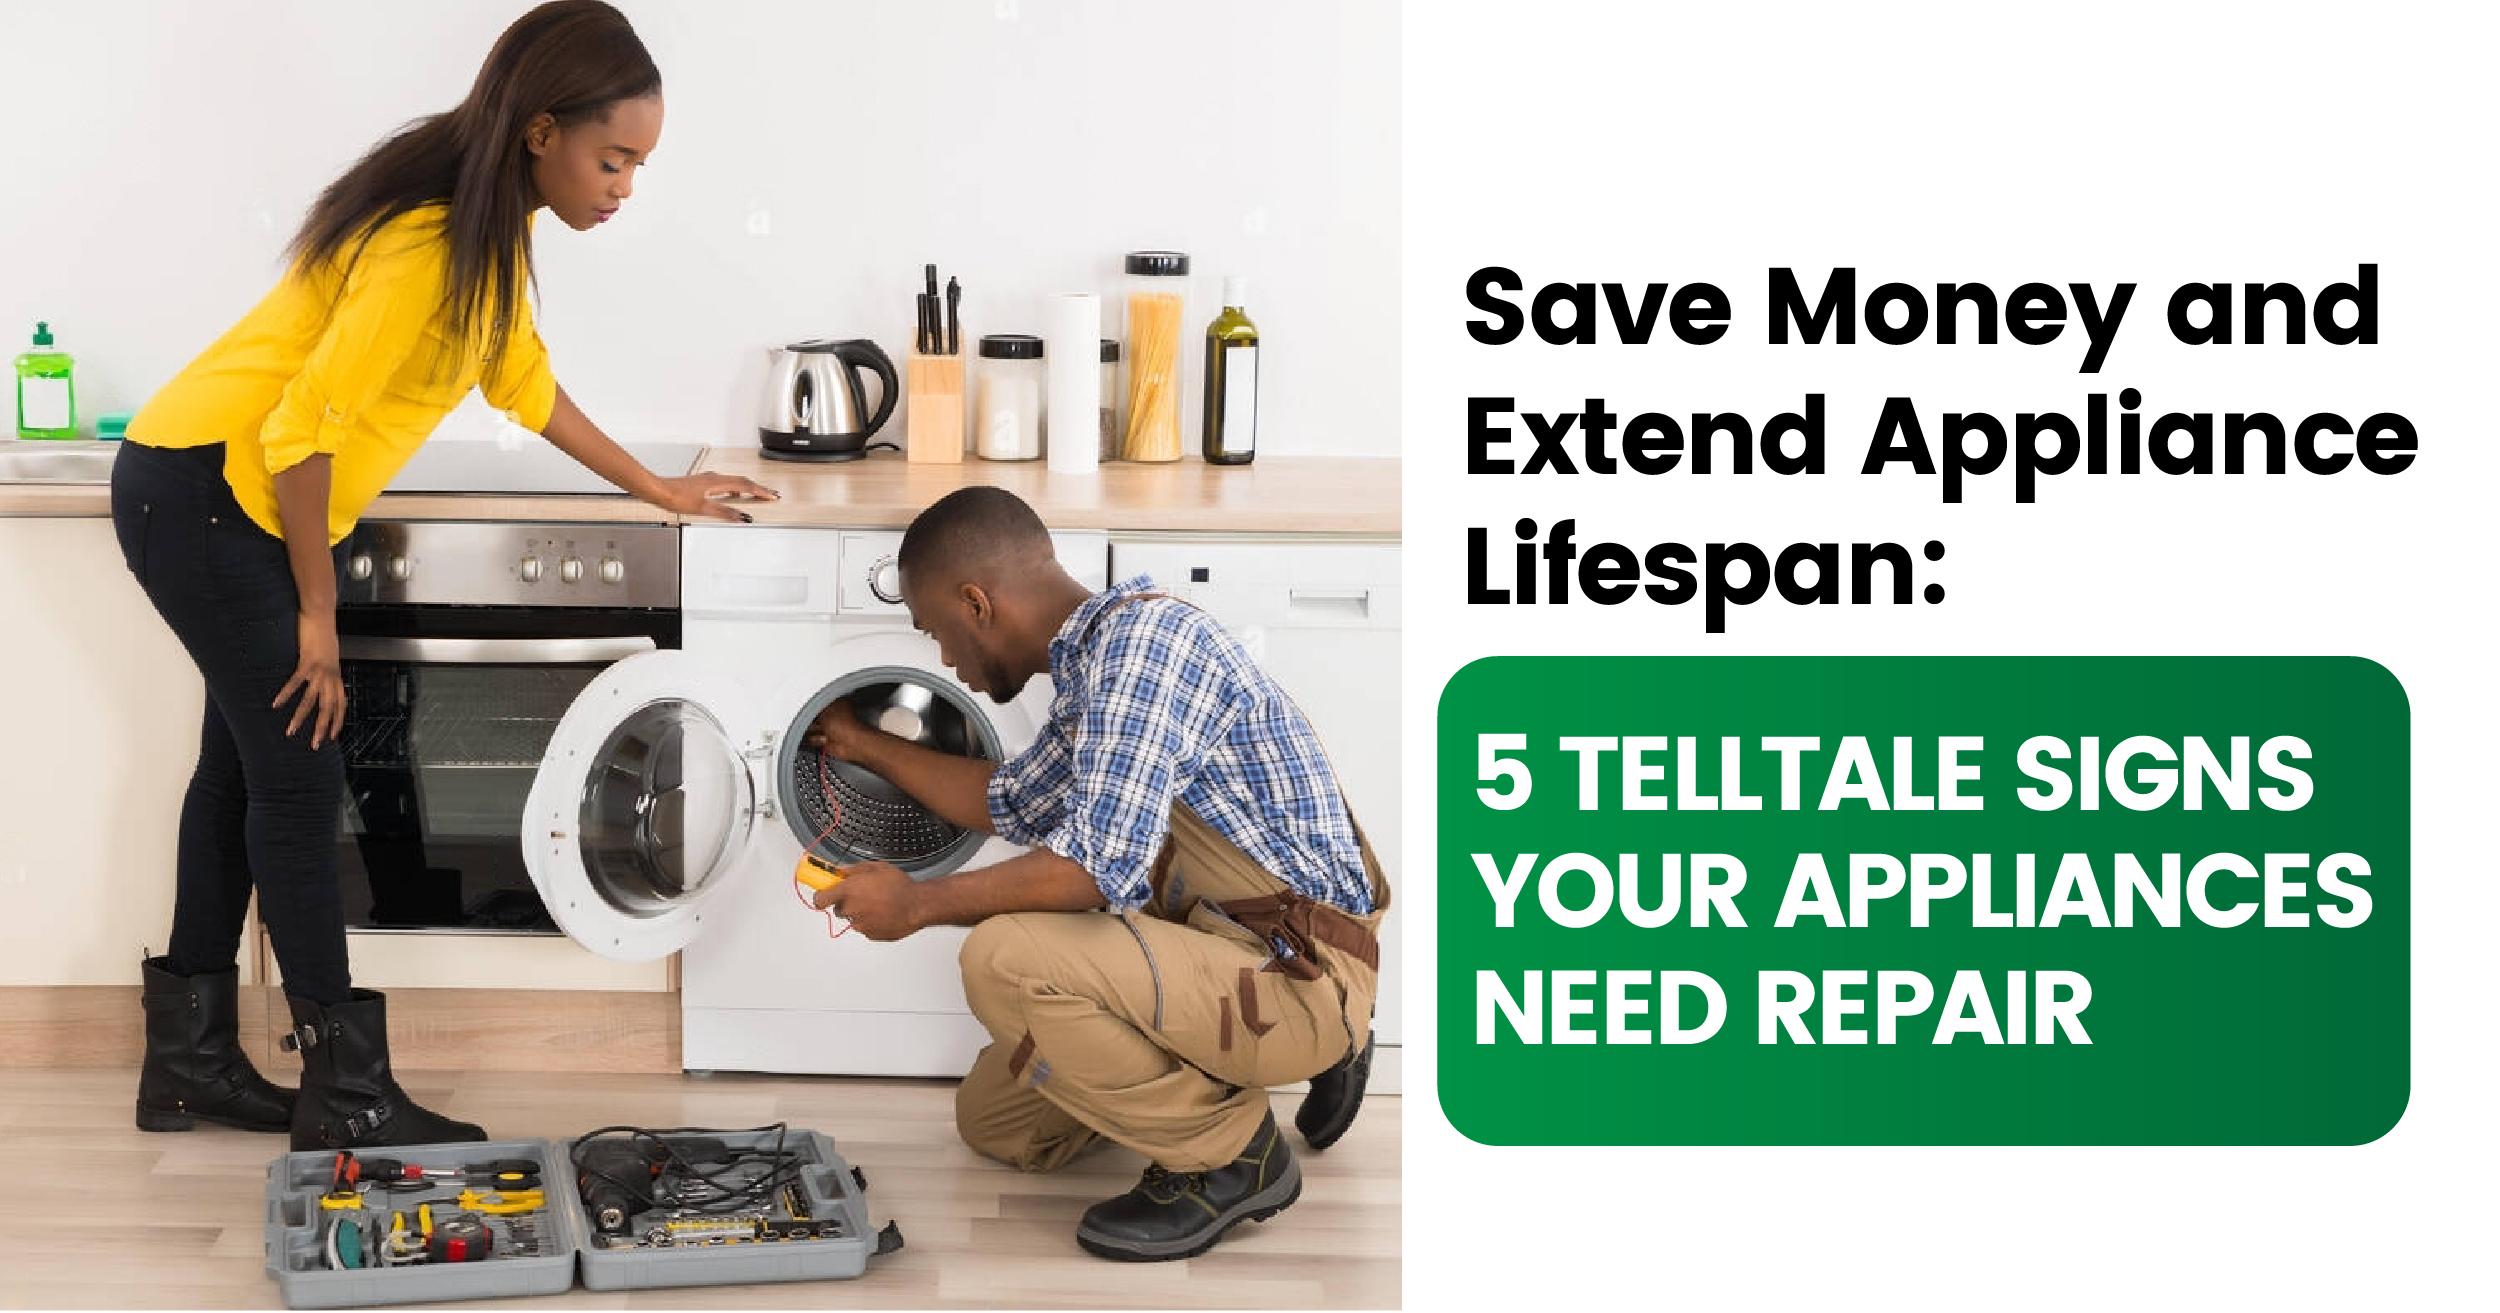 Appliances need repair